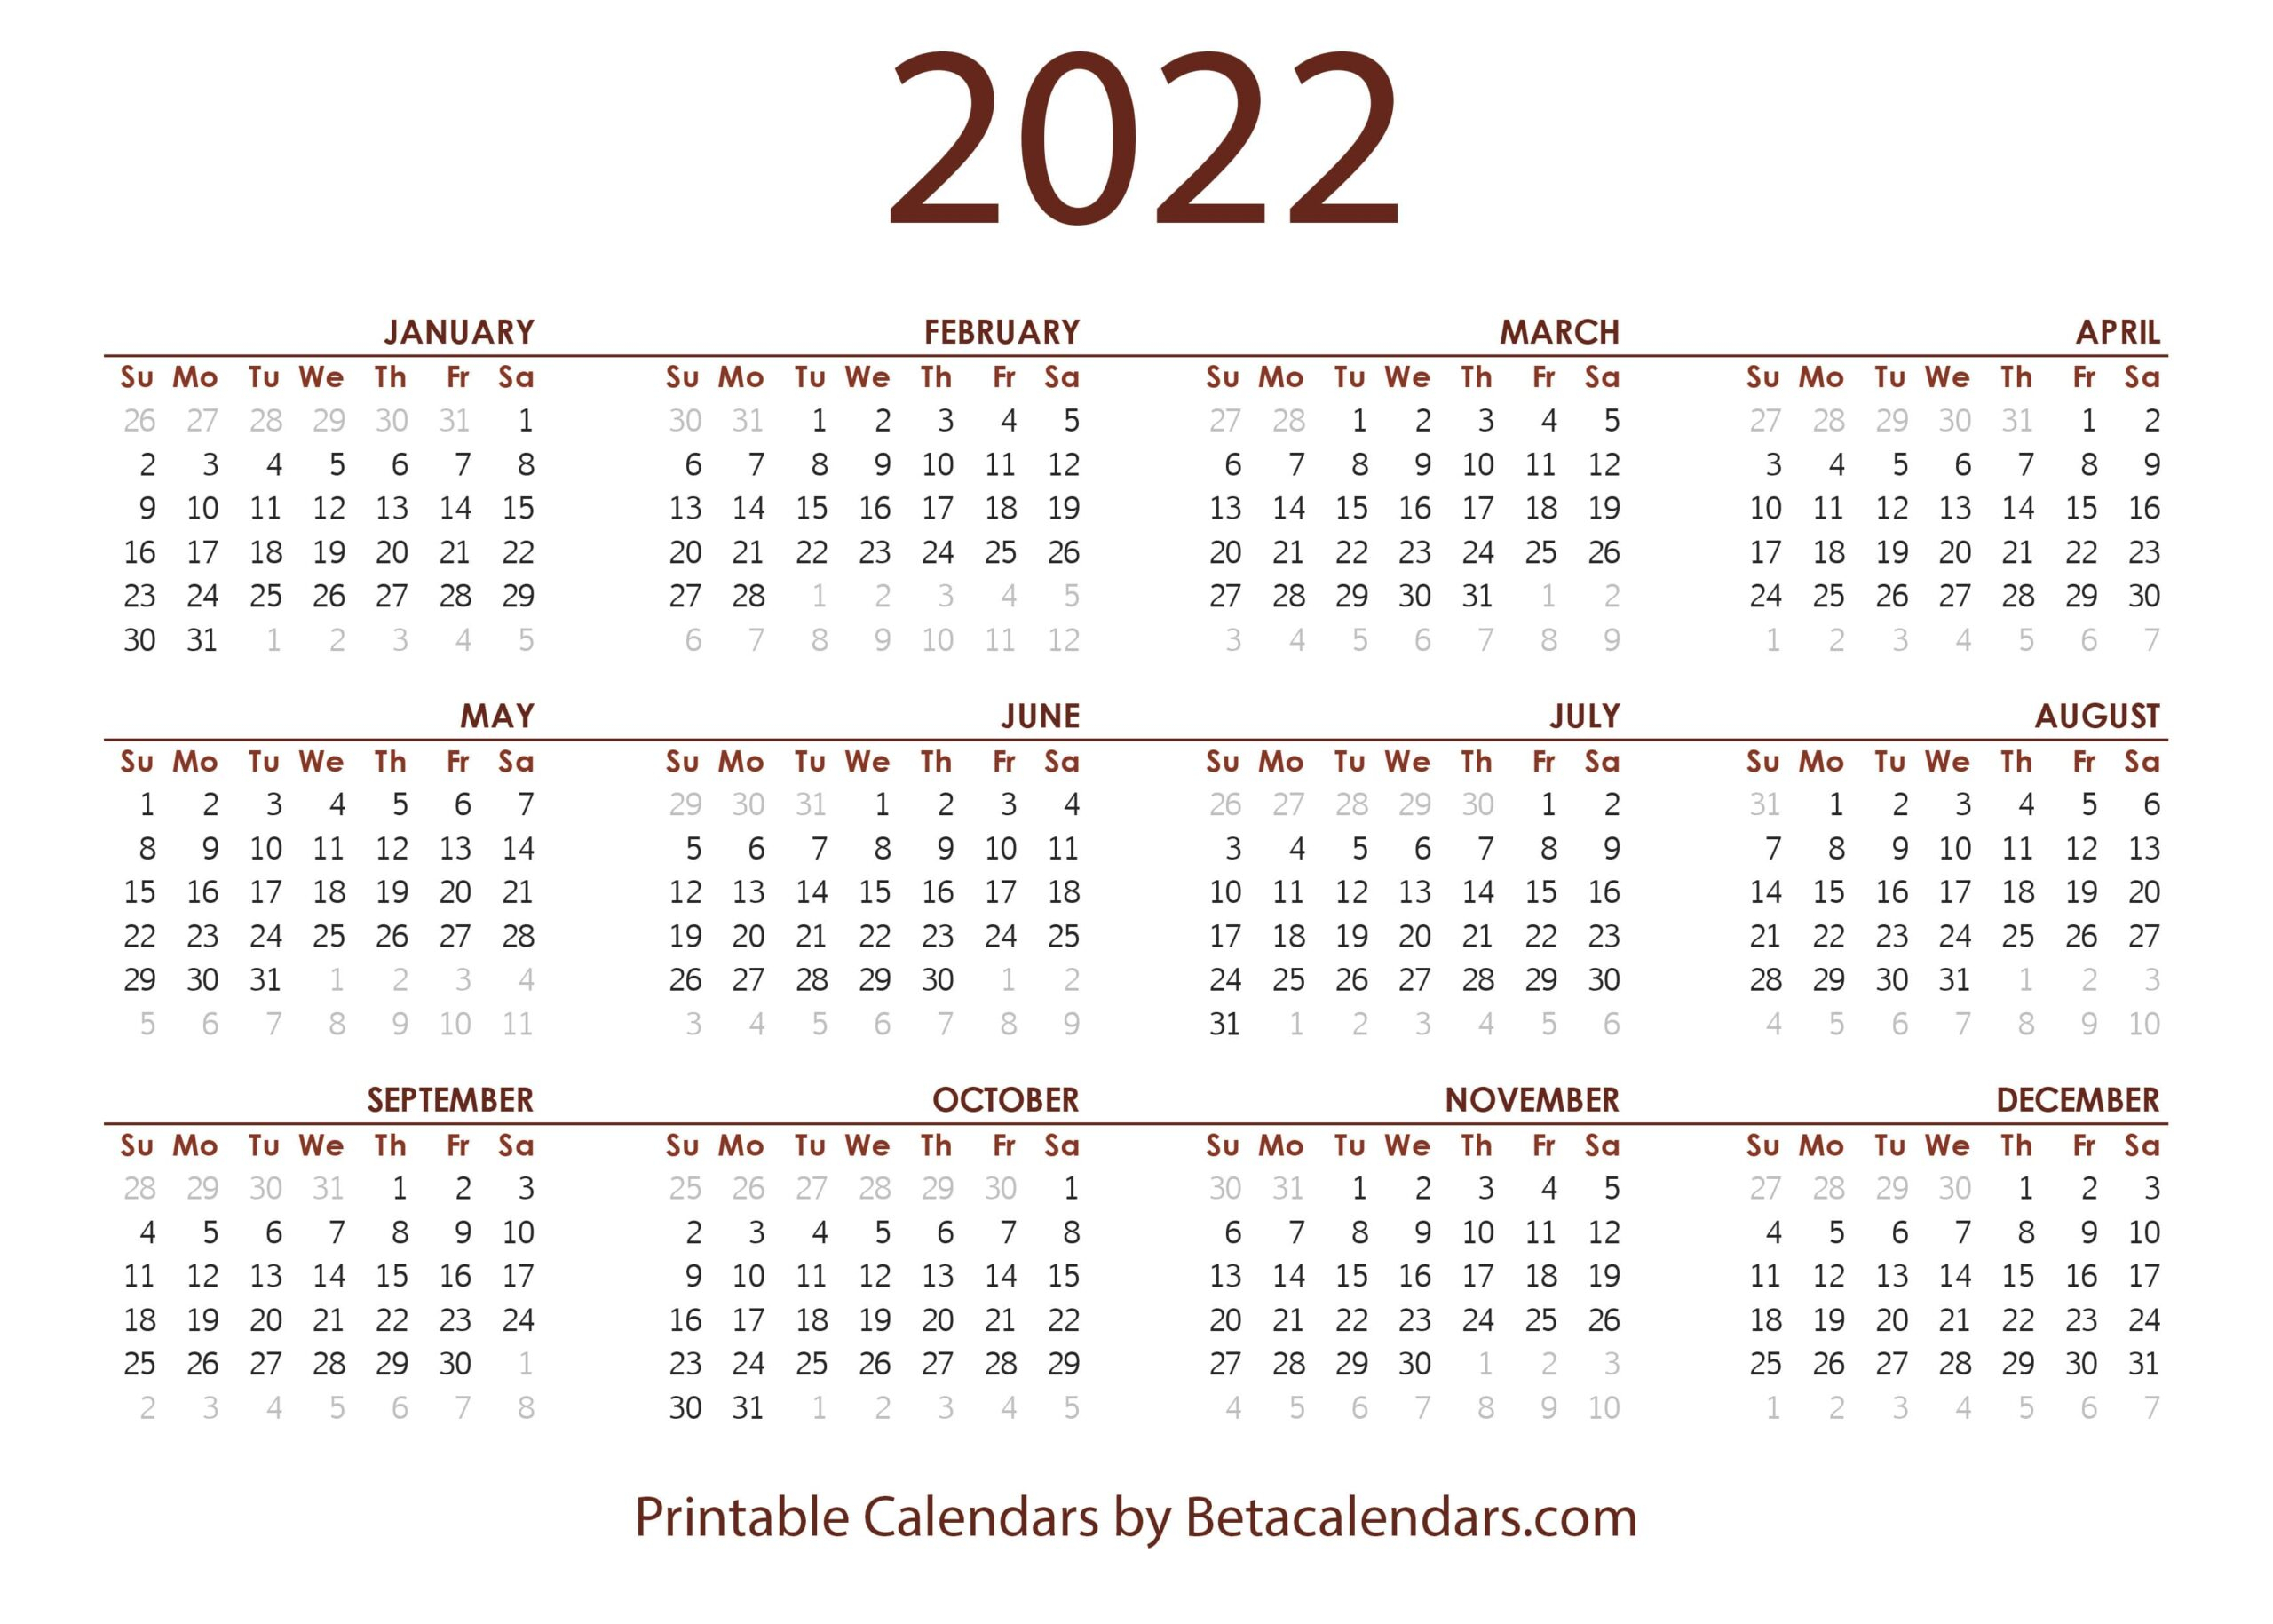 2022 Calendar - Beta Calendars